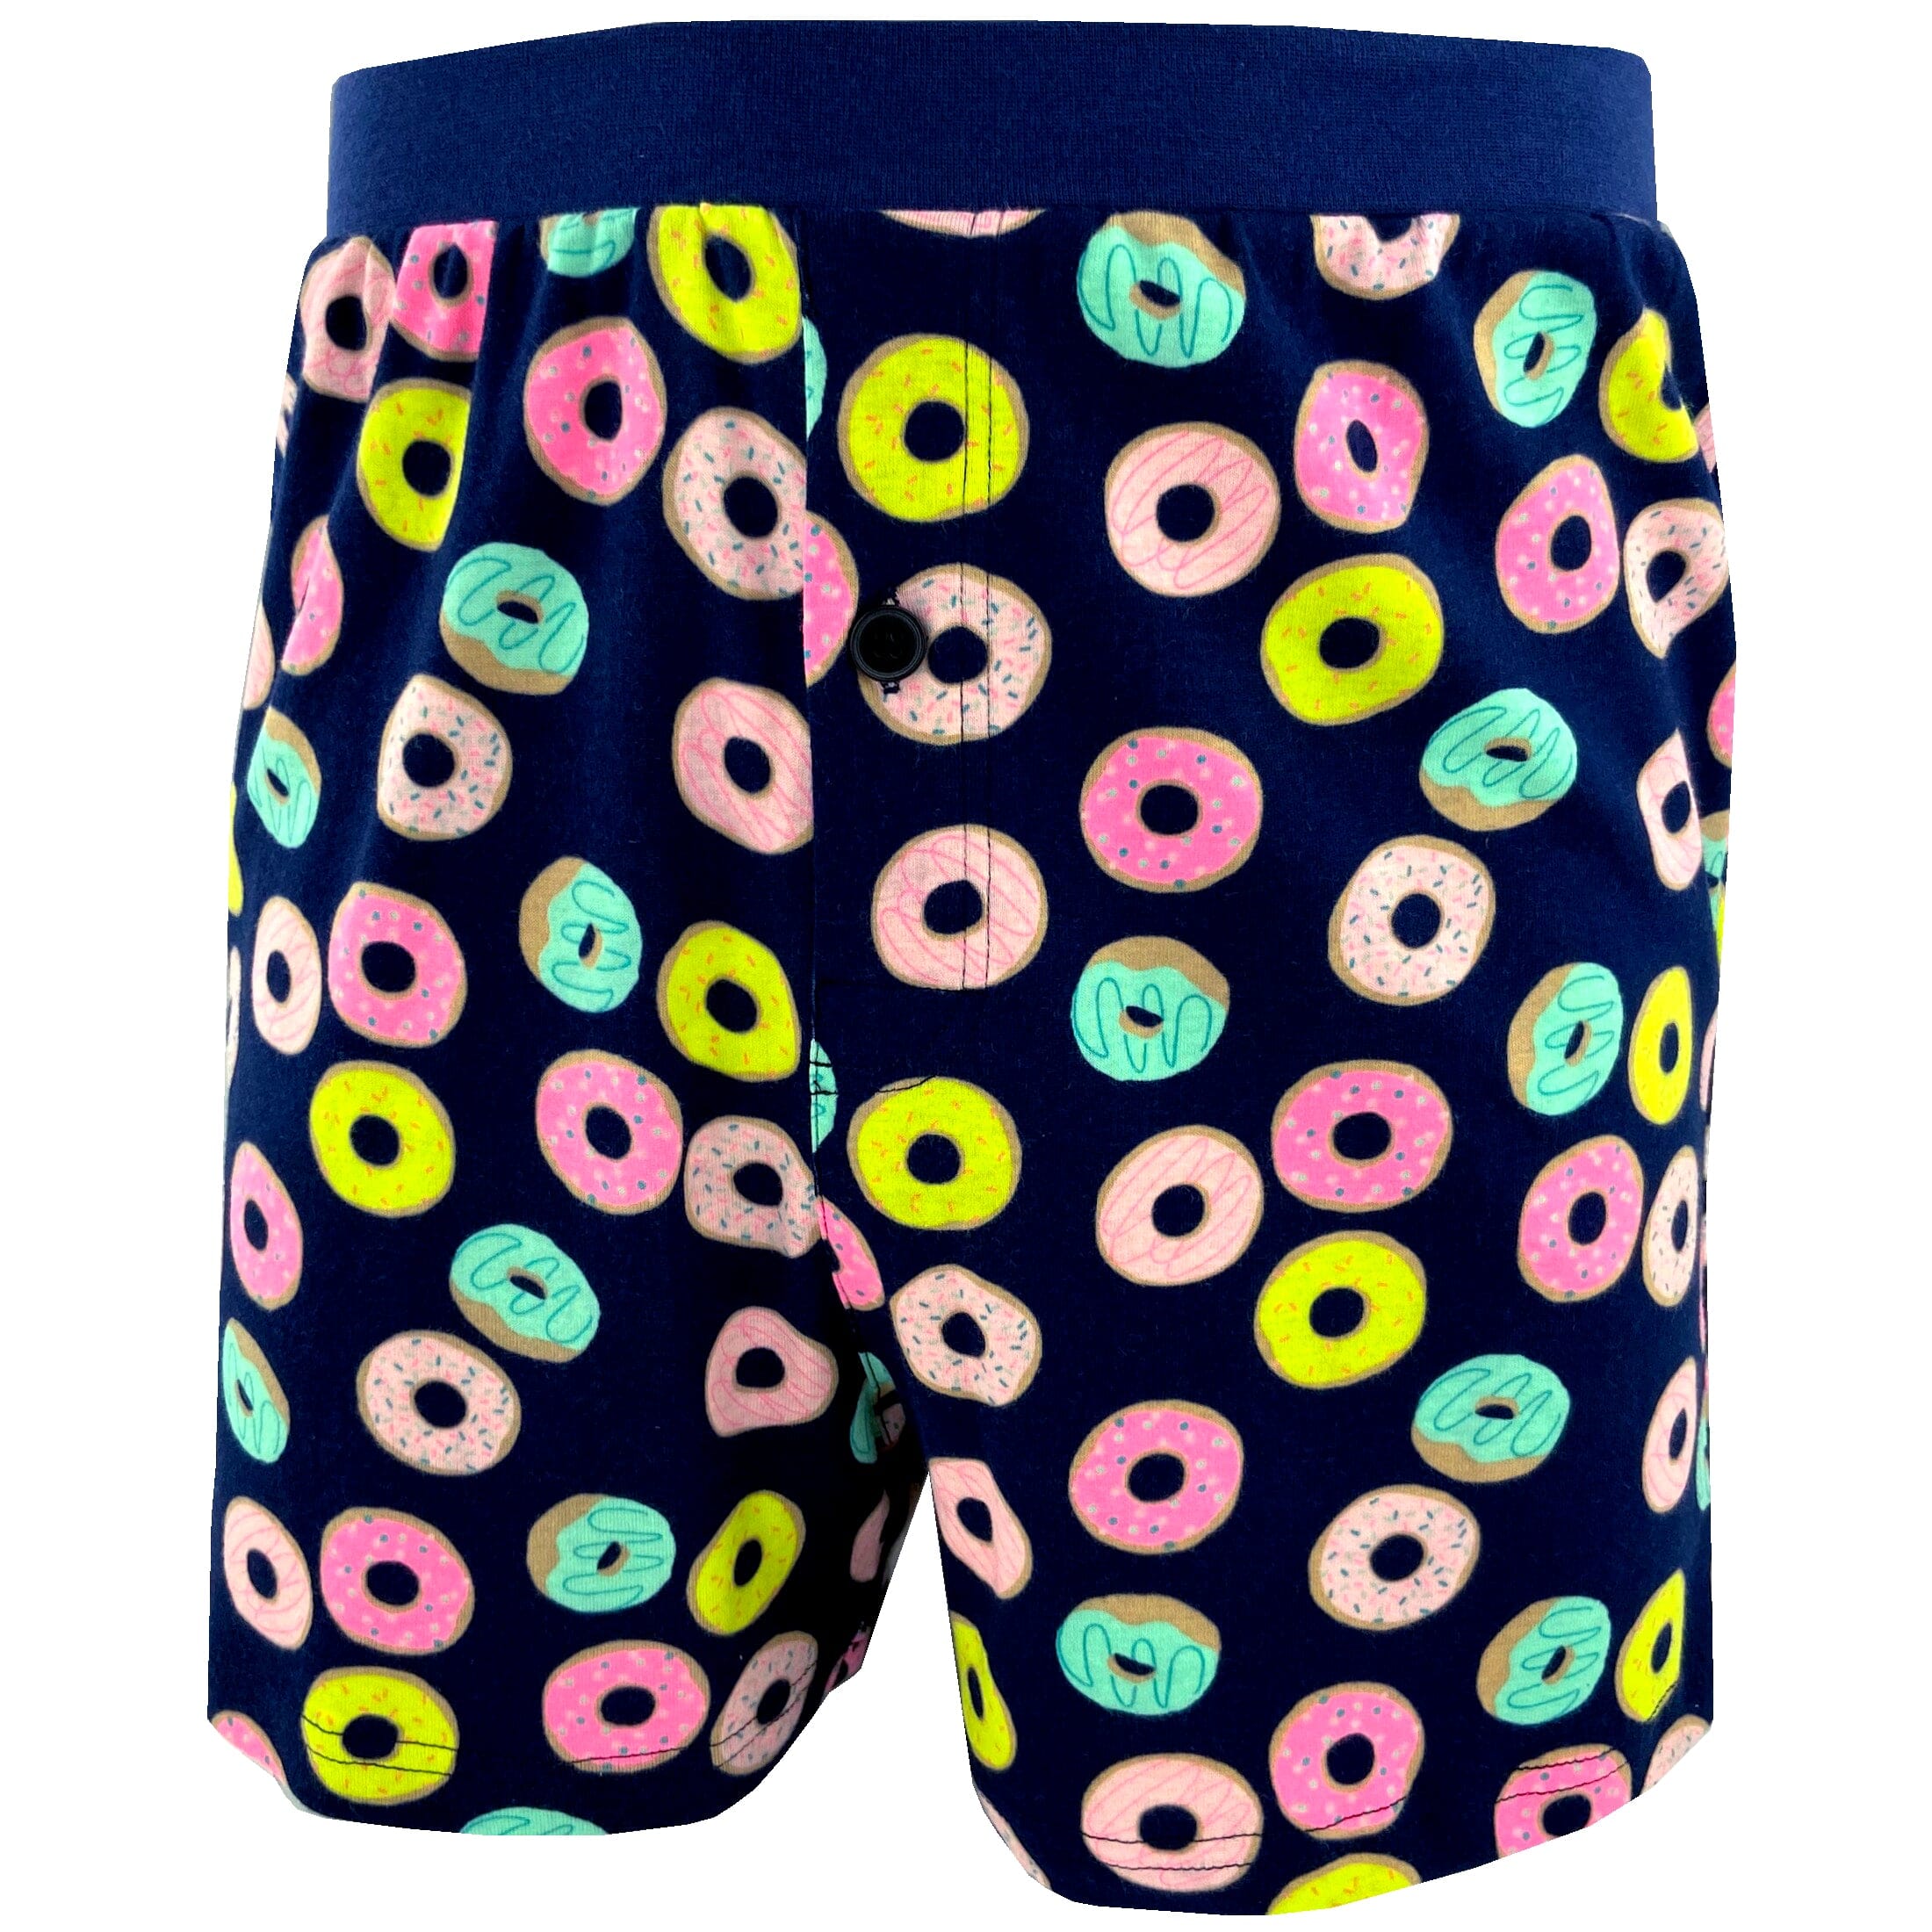 Men's Sleepwear Super Comfy Donut All Over Print Cotton Pajama Shorts